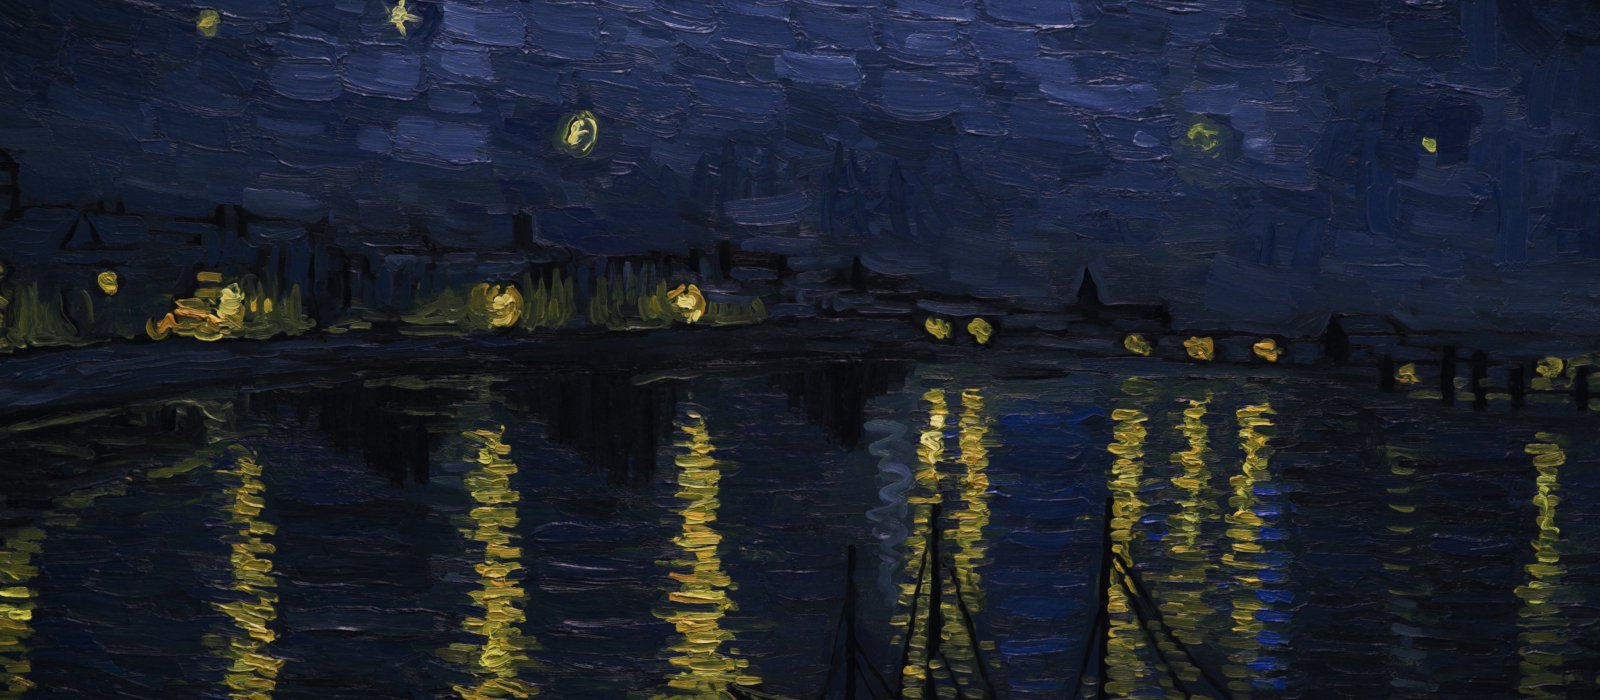 La Passion Van Gogh